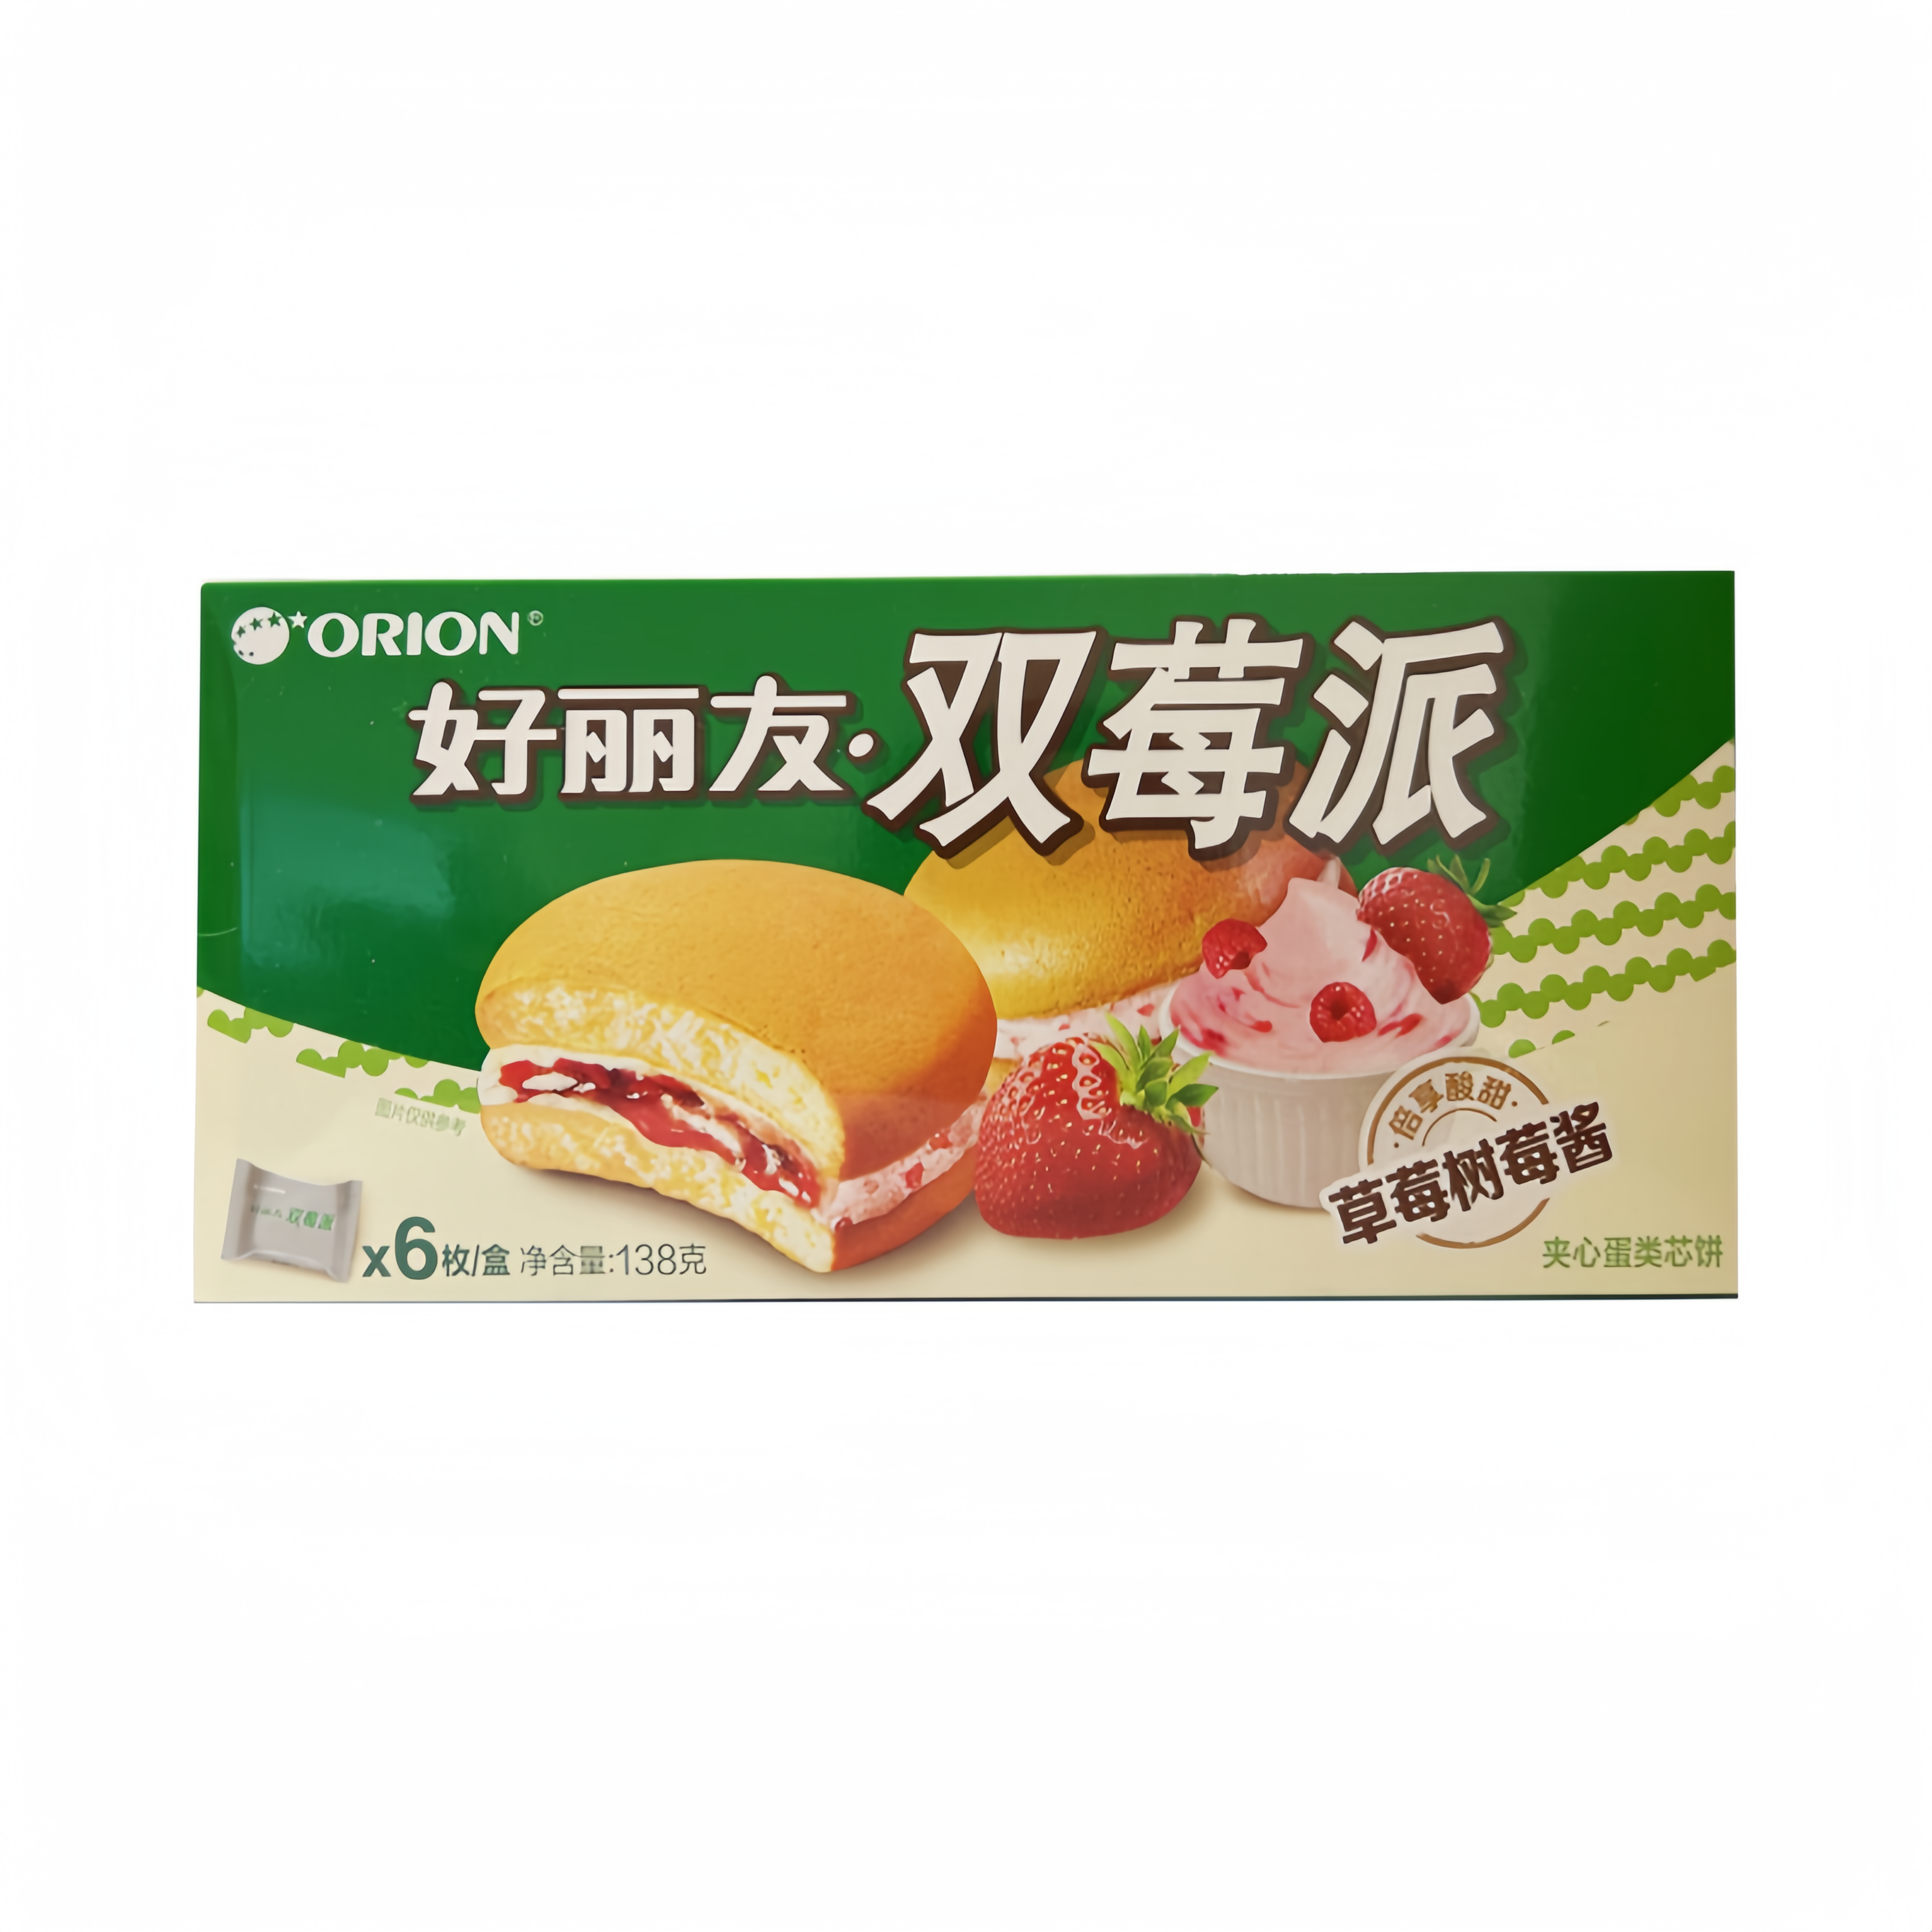 Strawberry Pie 138g ORION China